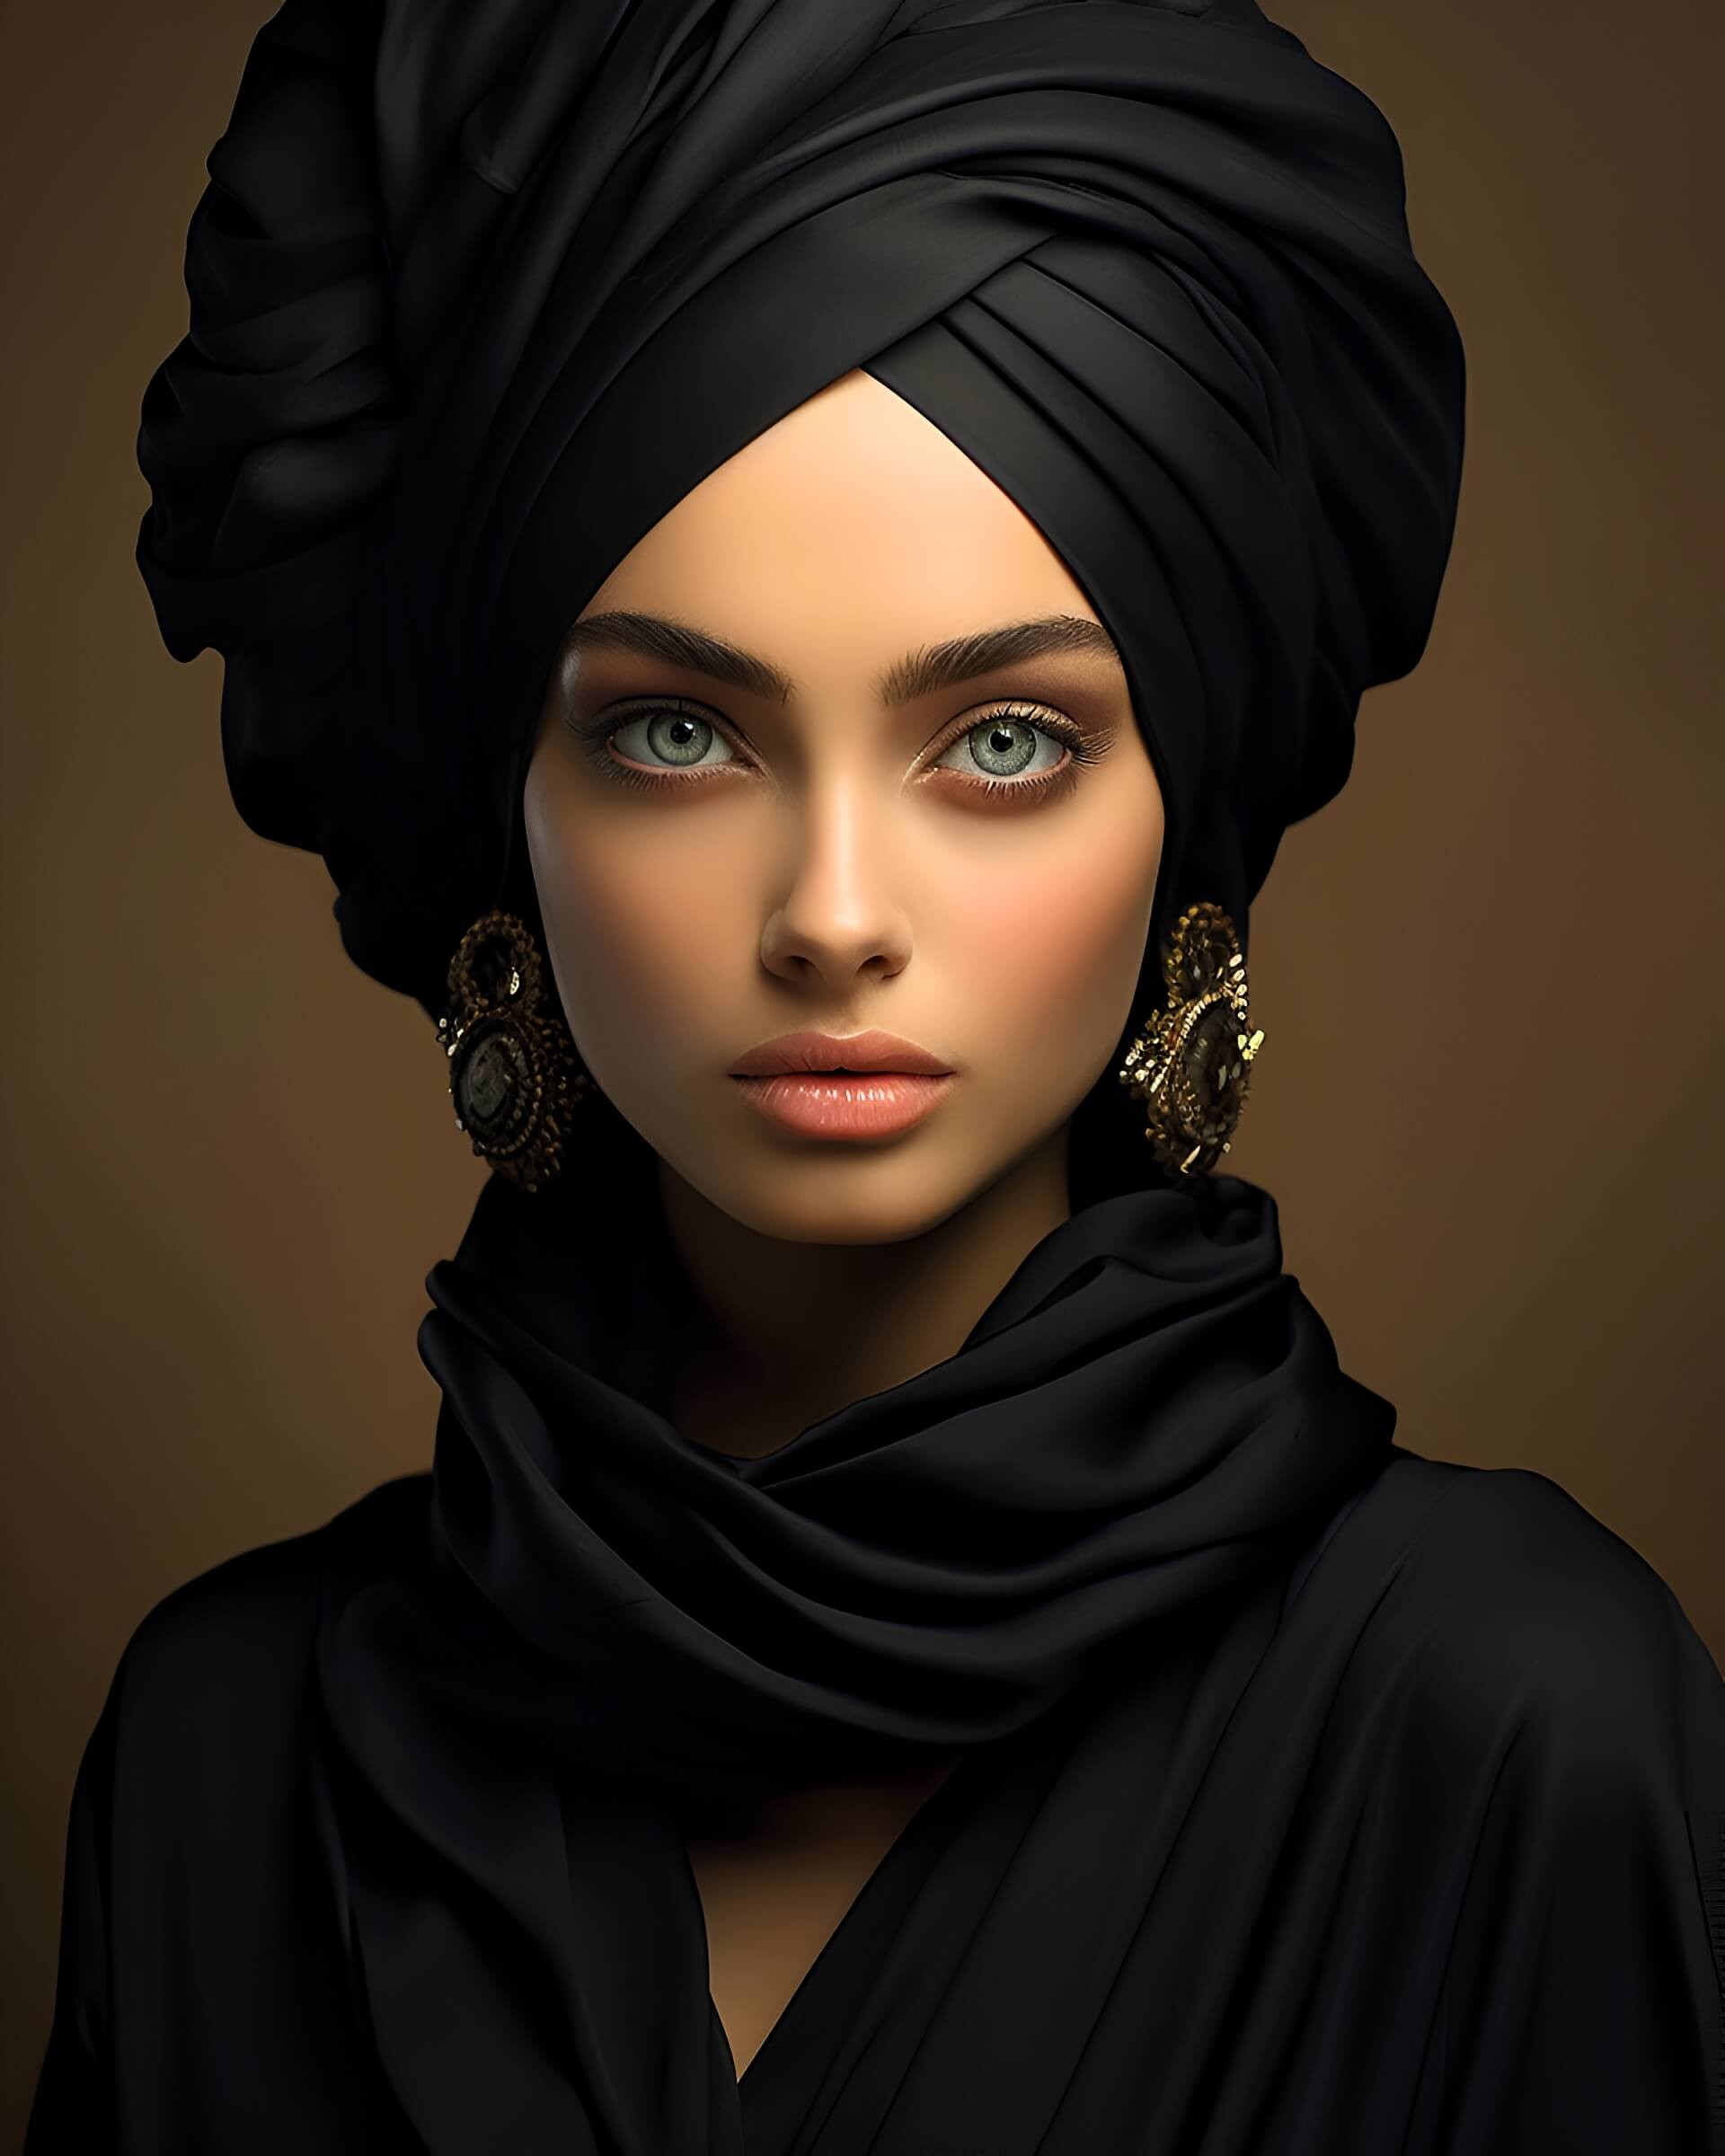 Woman with striking piercing eyes in AI artwork.